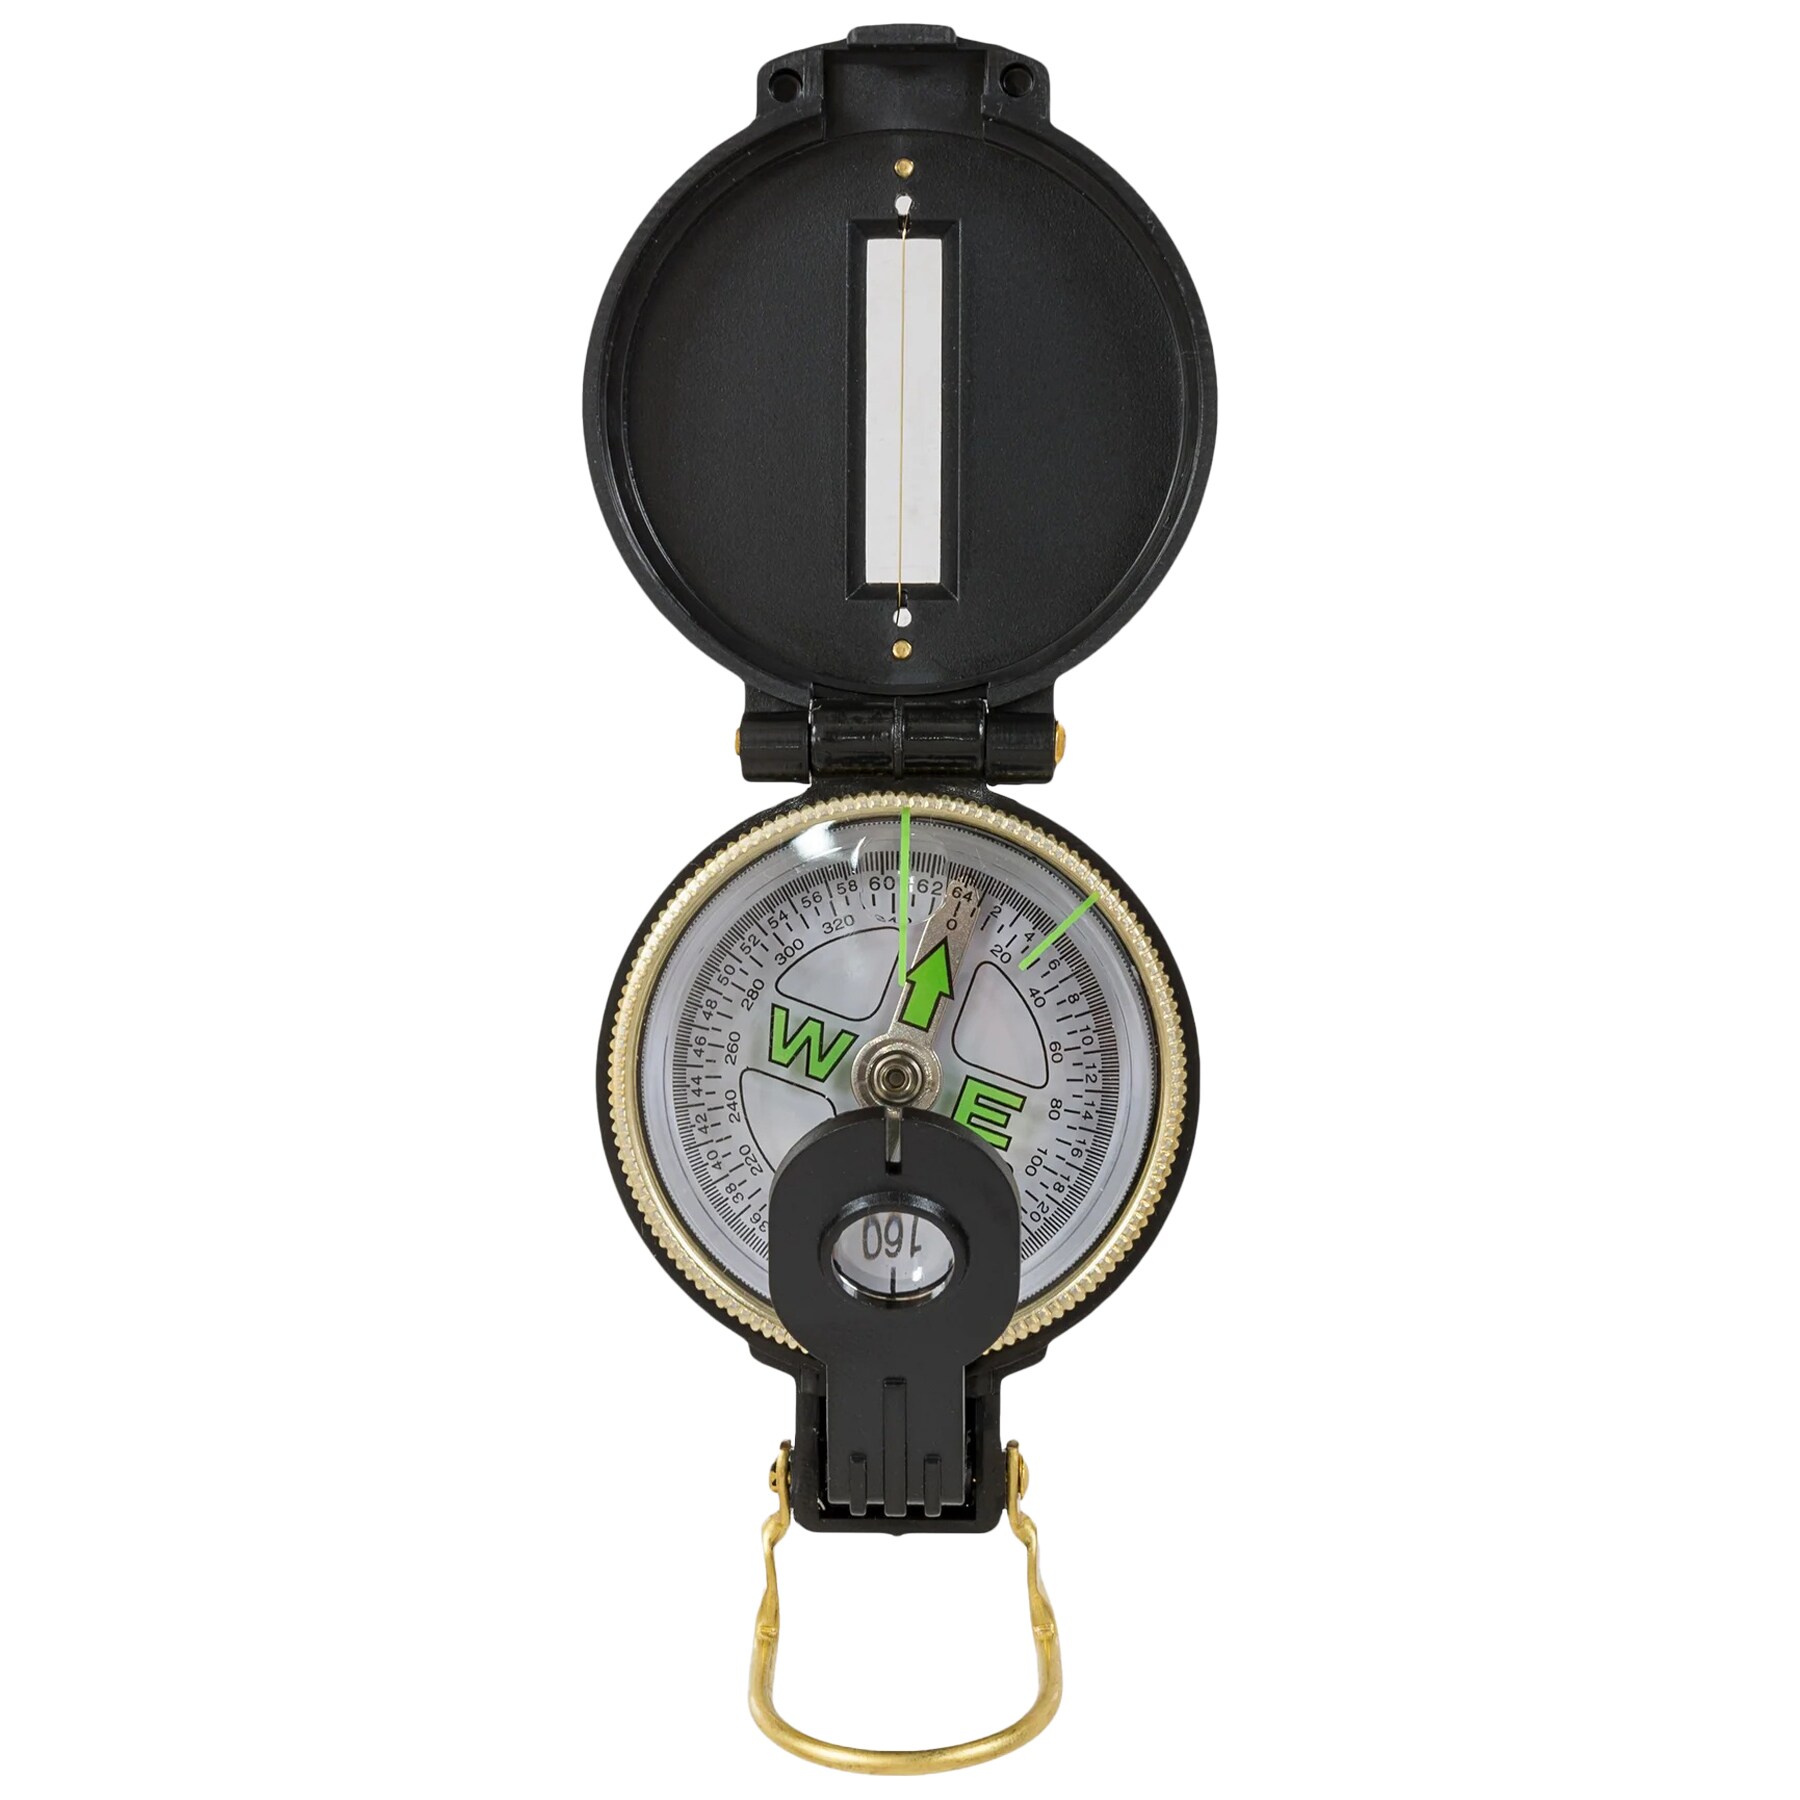 Busola Highlander Outdoor Lensatic Compass